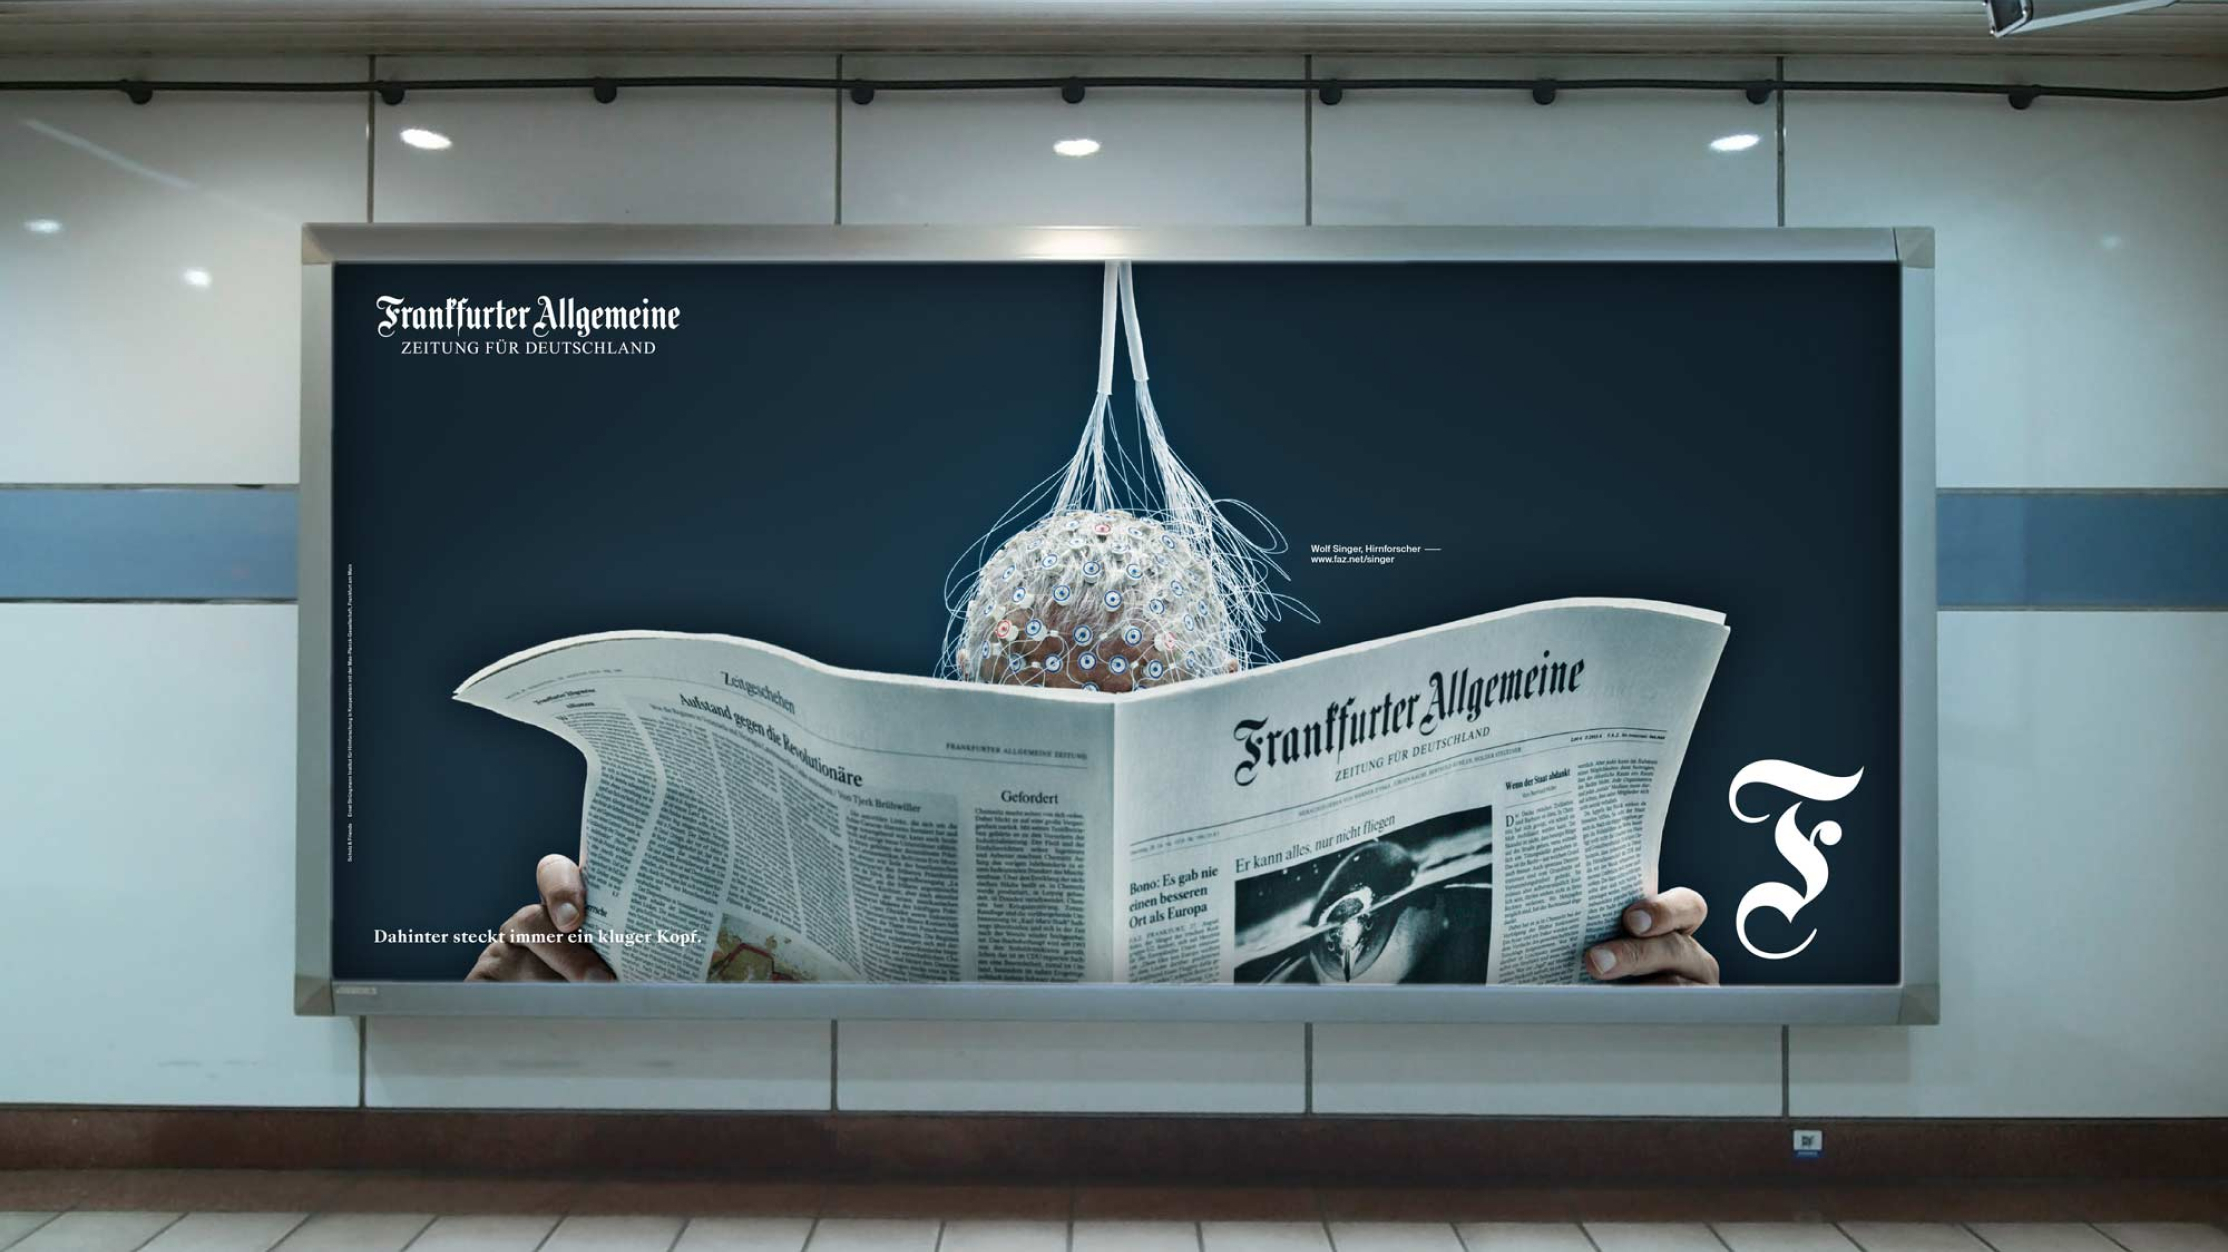 Photograph of Frankfurter Allgemeine in use on billboard